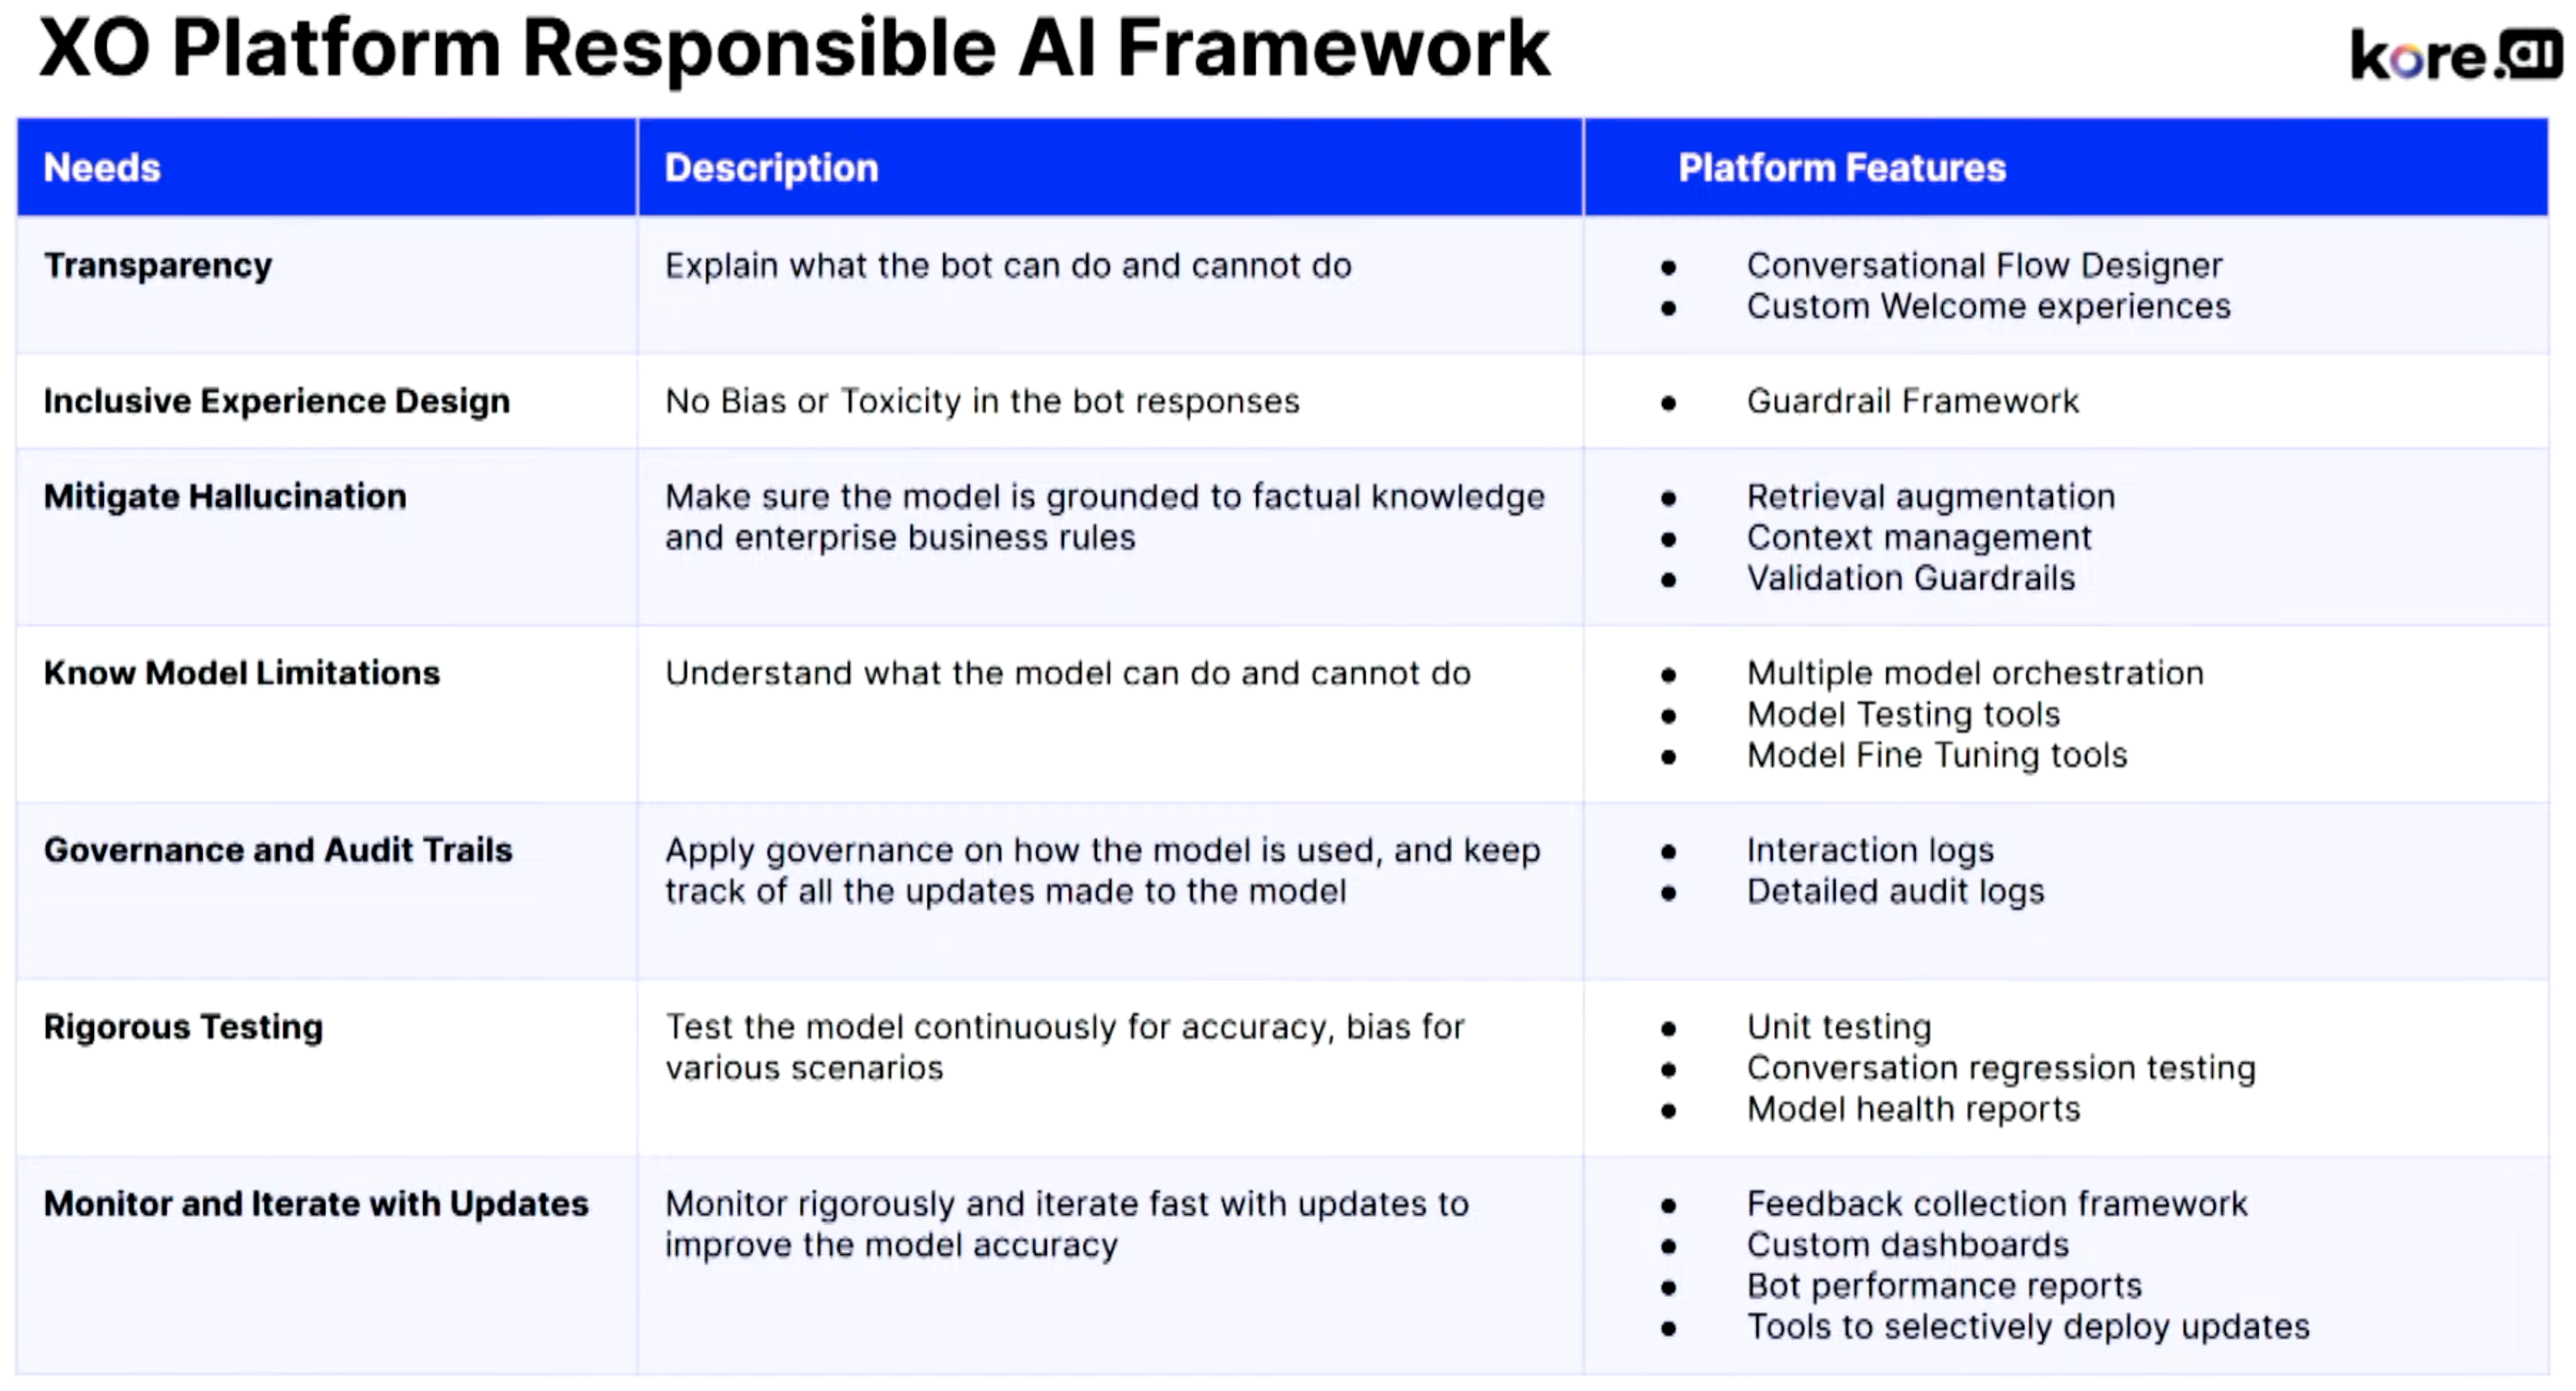 XO Platform Responsible AI